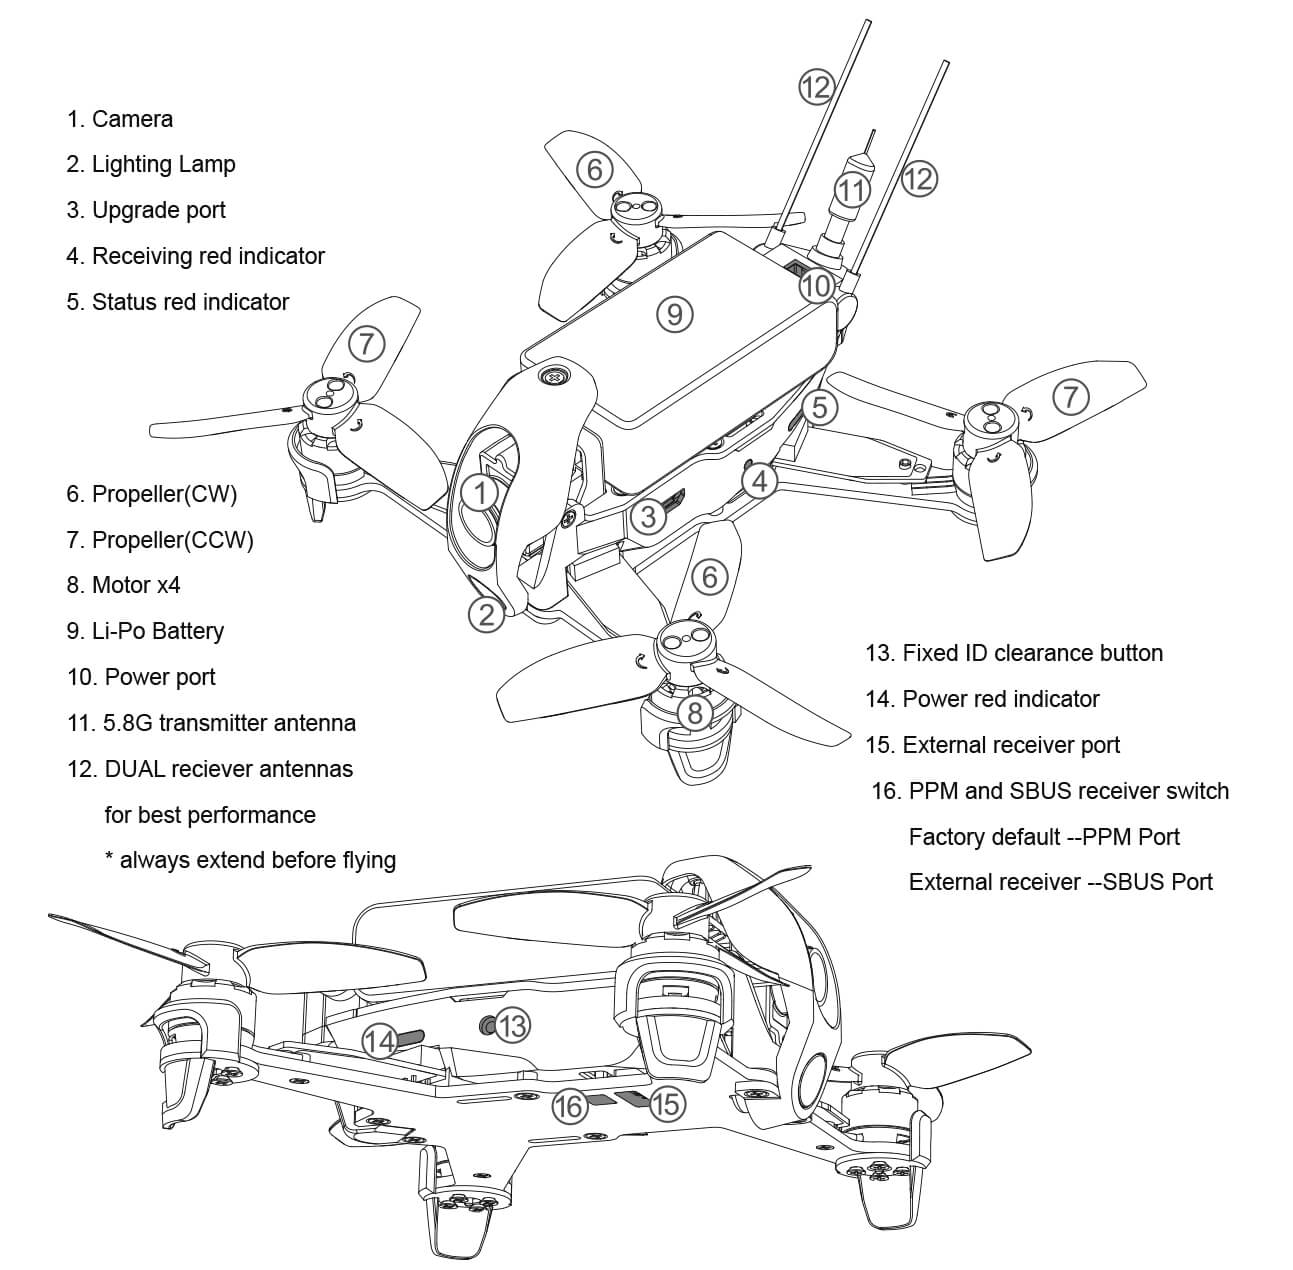 Walkera Rodeo 110 RTF Racing Drone with DEVO7 Camera Battery